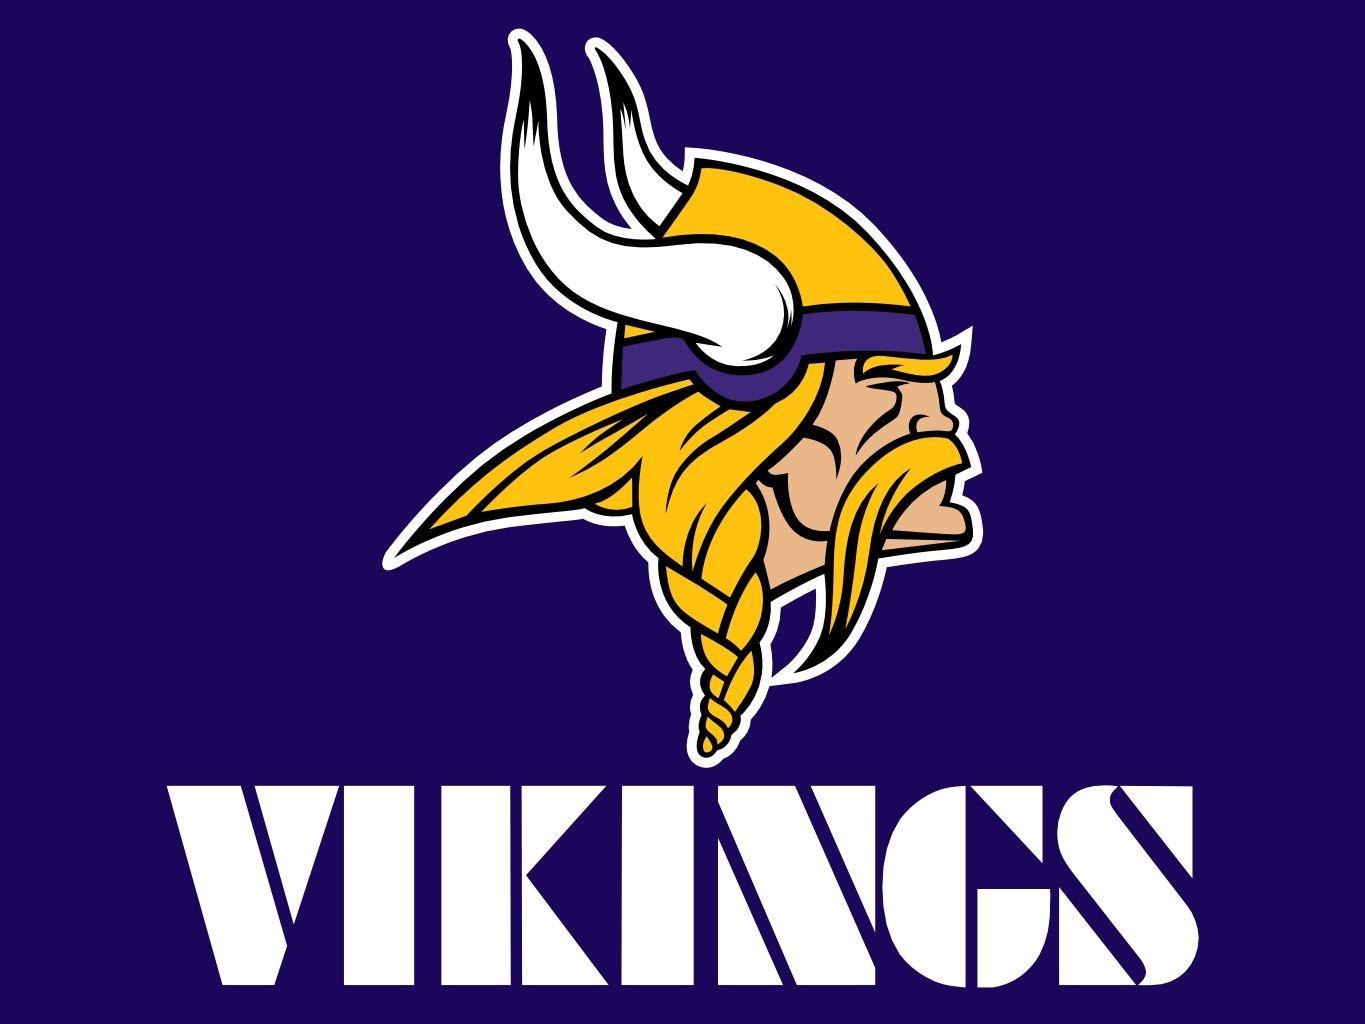 Minnesota Vikings Logo Wallpaper Pictures To